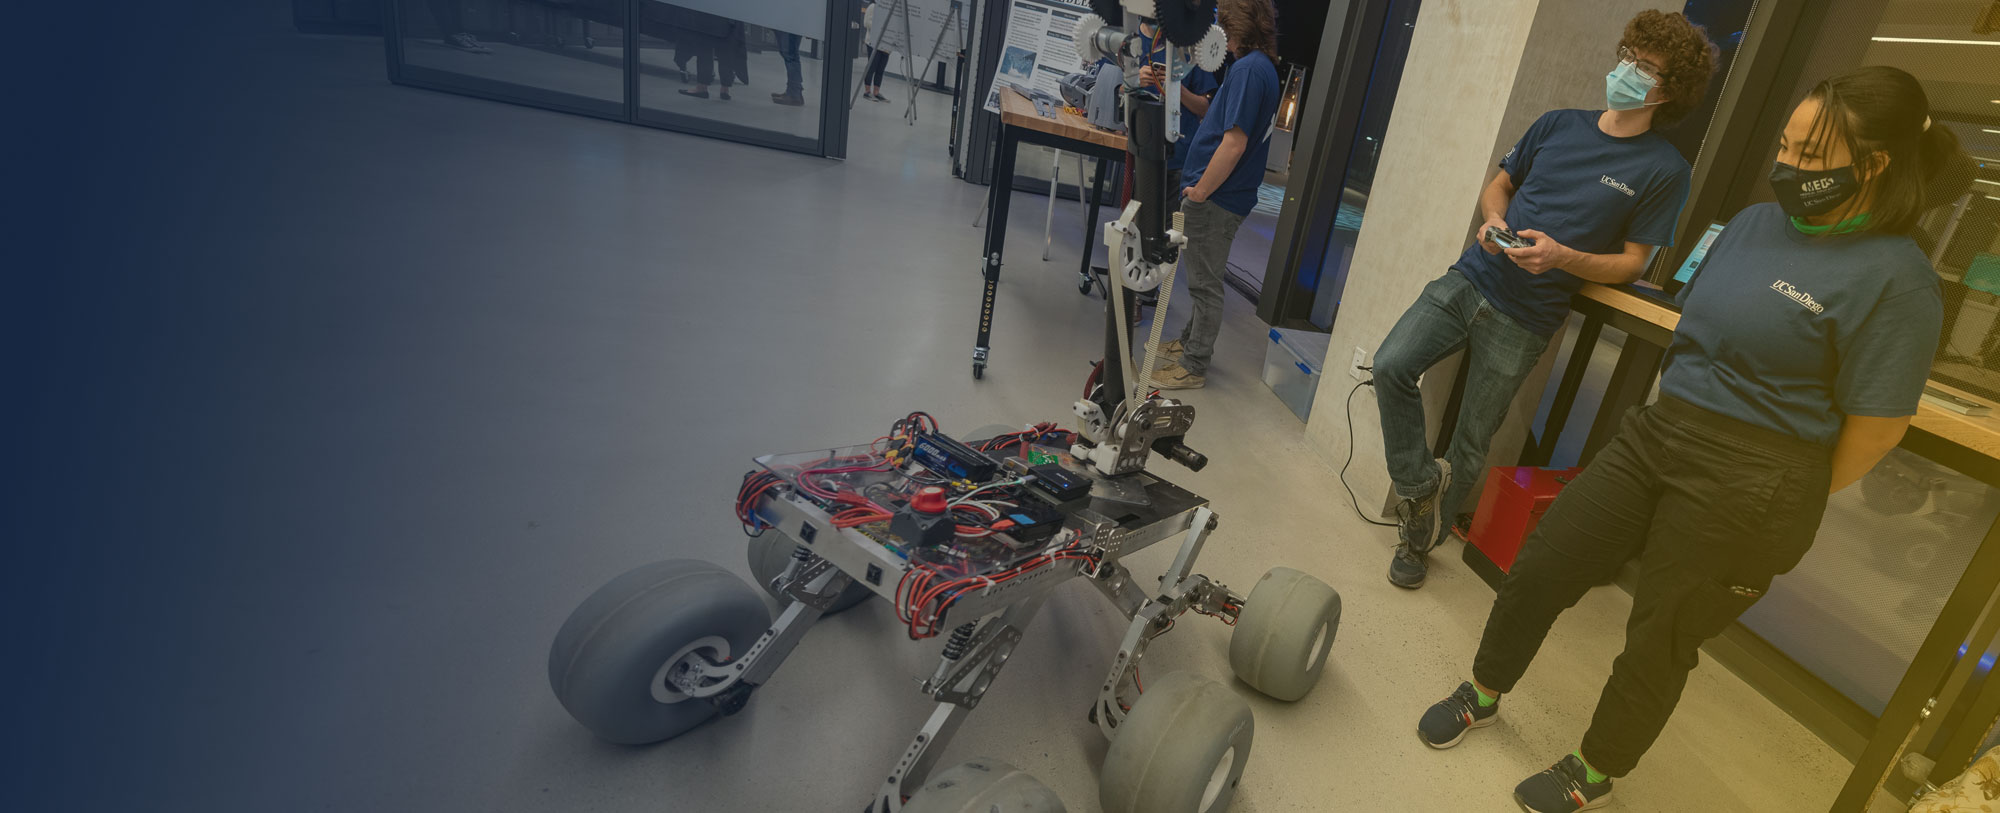 Student innovators controlling a robotic vehicle